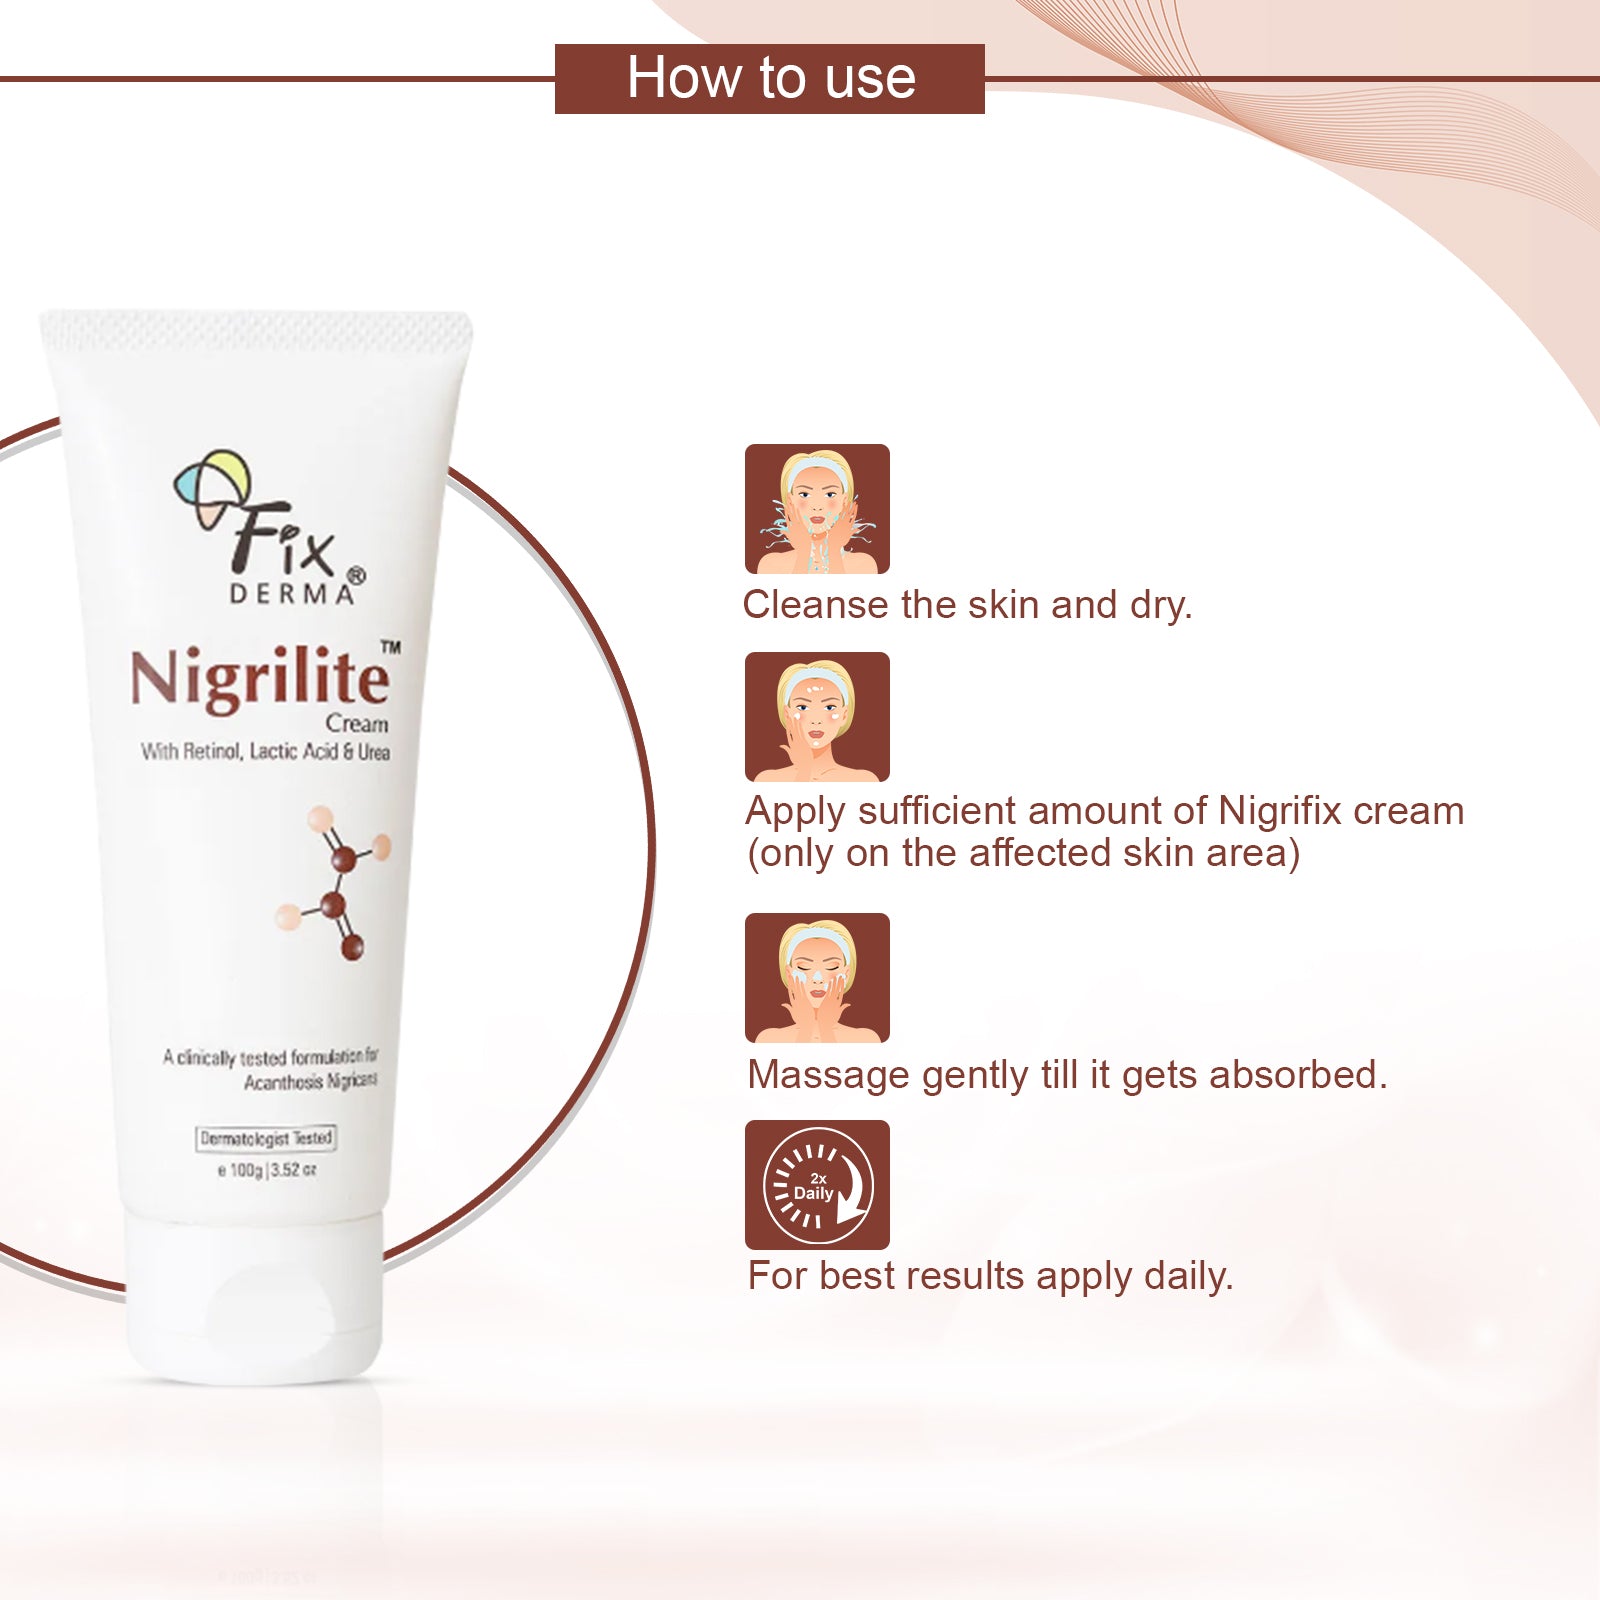 Fixderma Nigrilite Cream 100 gm